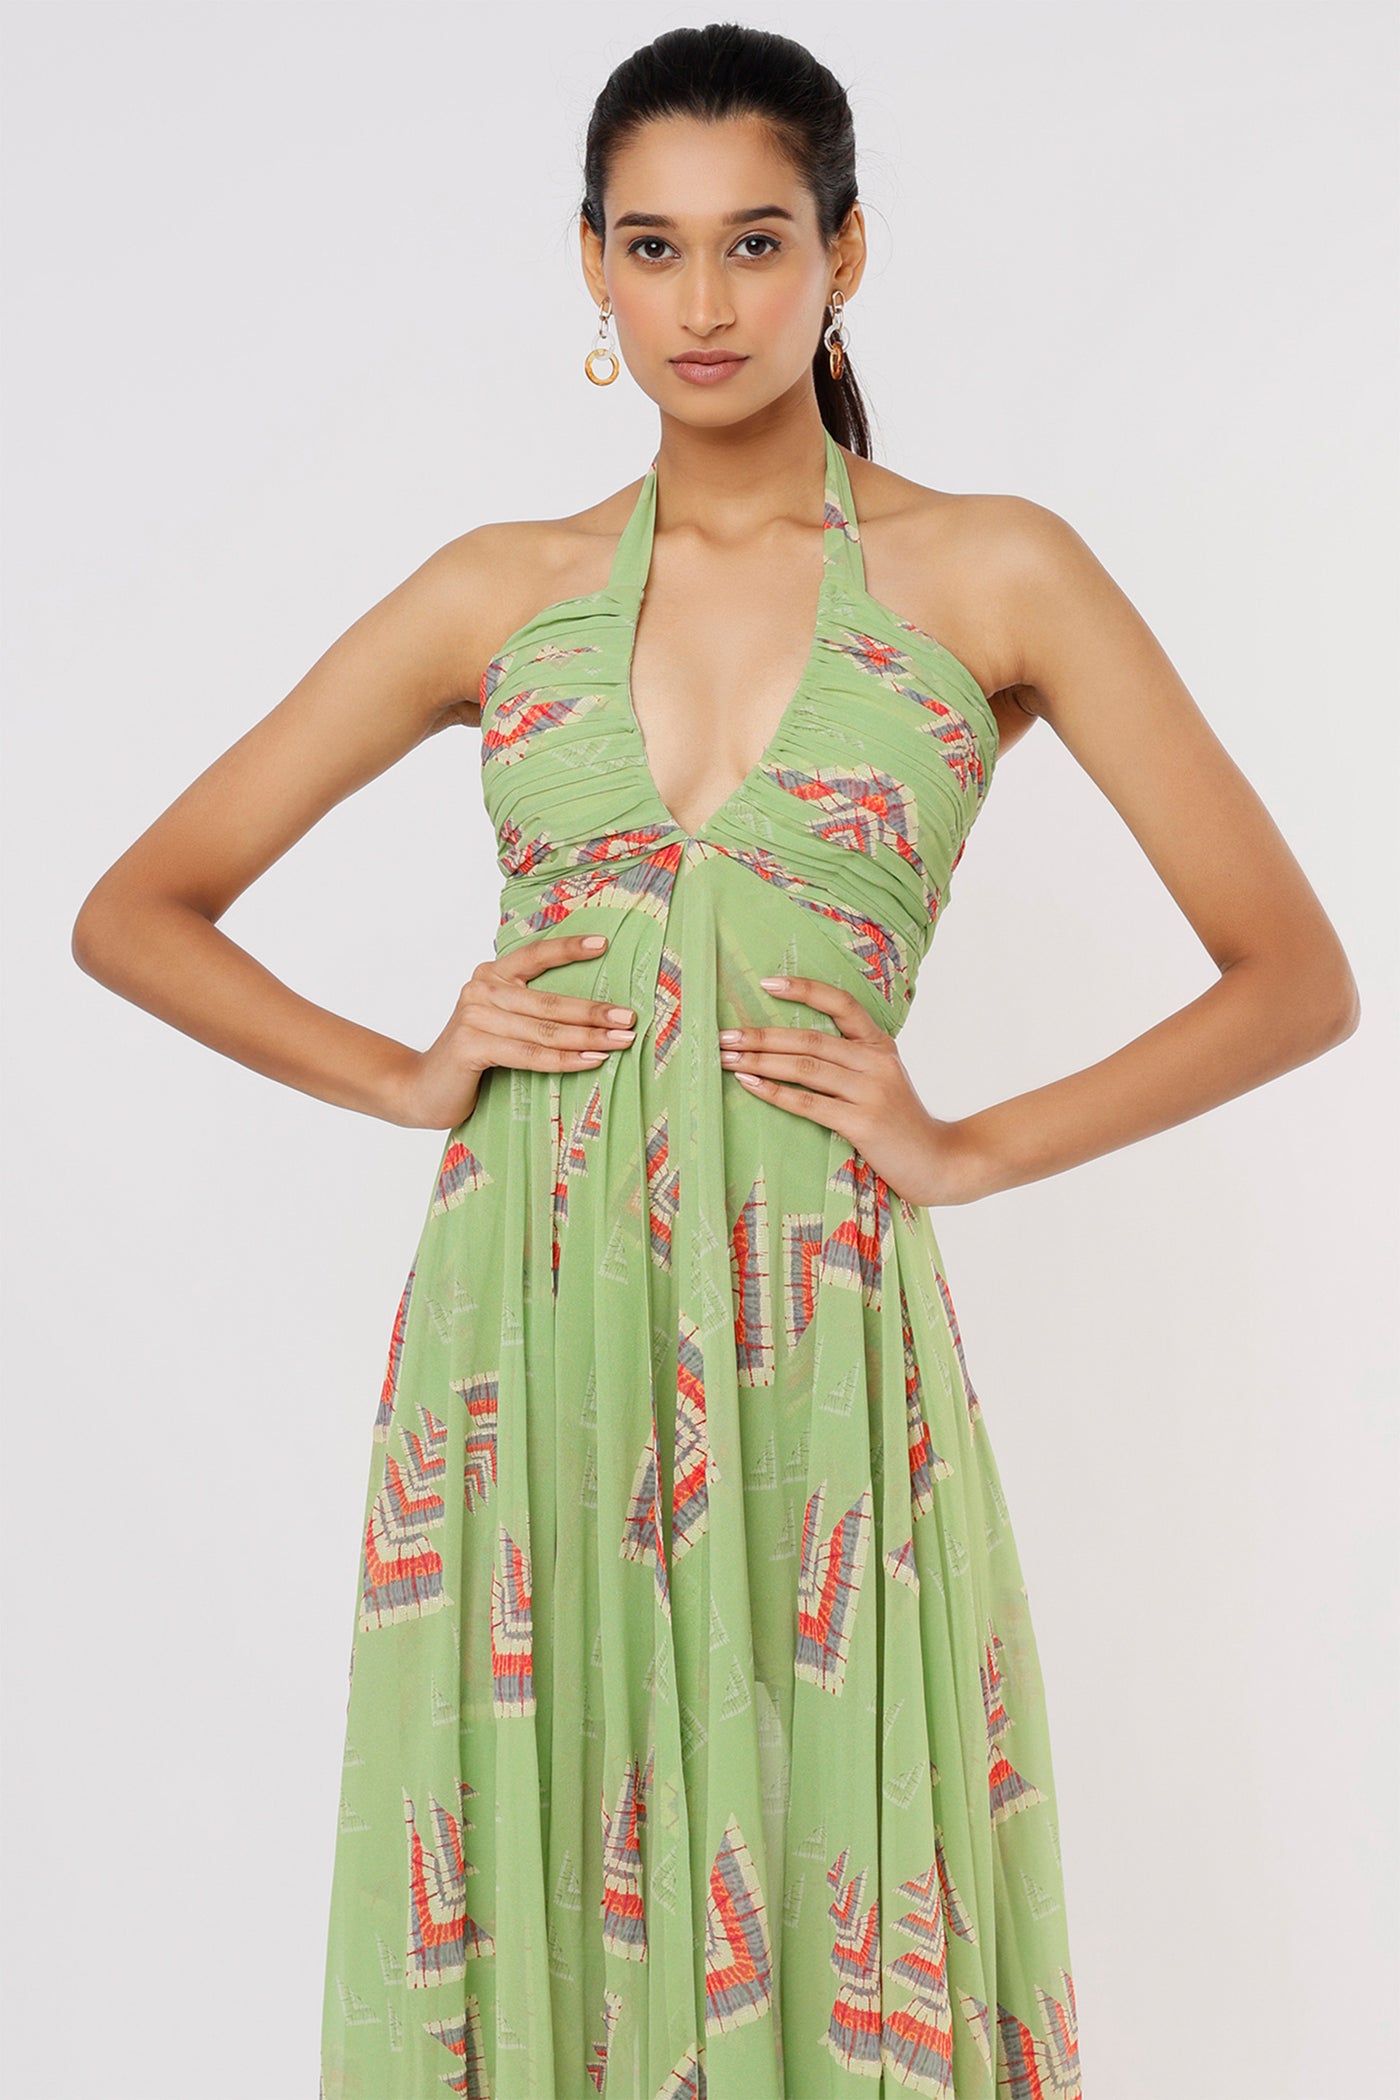 Gopi vaid Fedora High Low Dress mint green festive Indian designer wear online shopping melange singapore